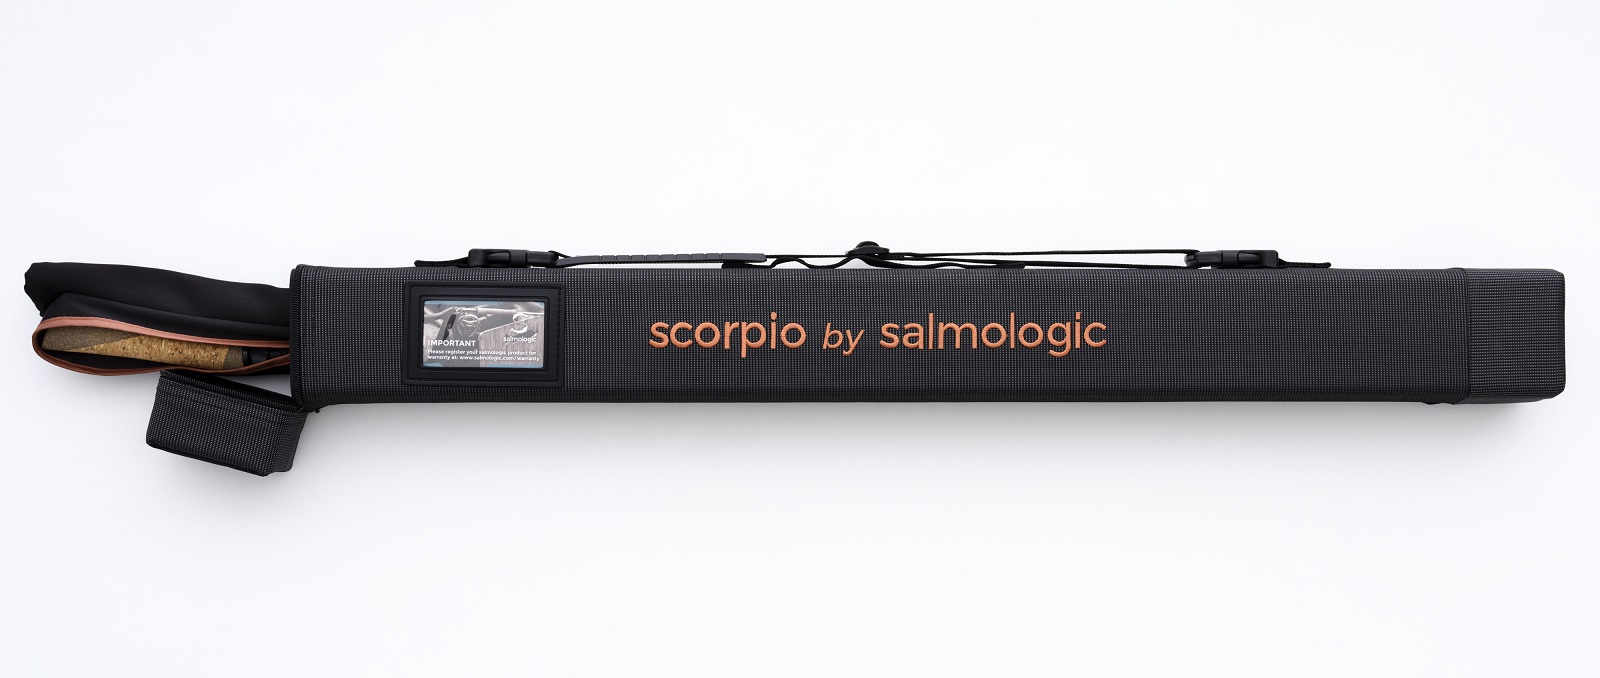 Salmologic Scorpio 12,8 Fod 26g/401 grains 5-delt - fluestænger - fluer.dk